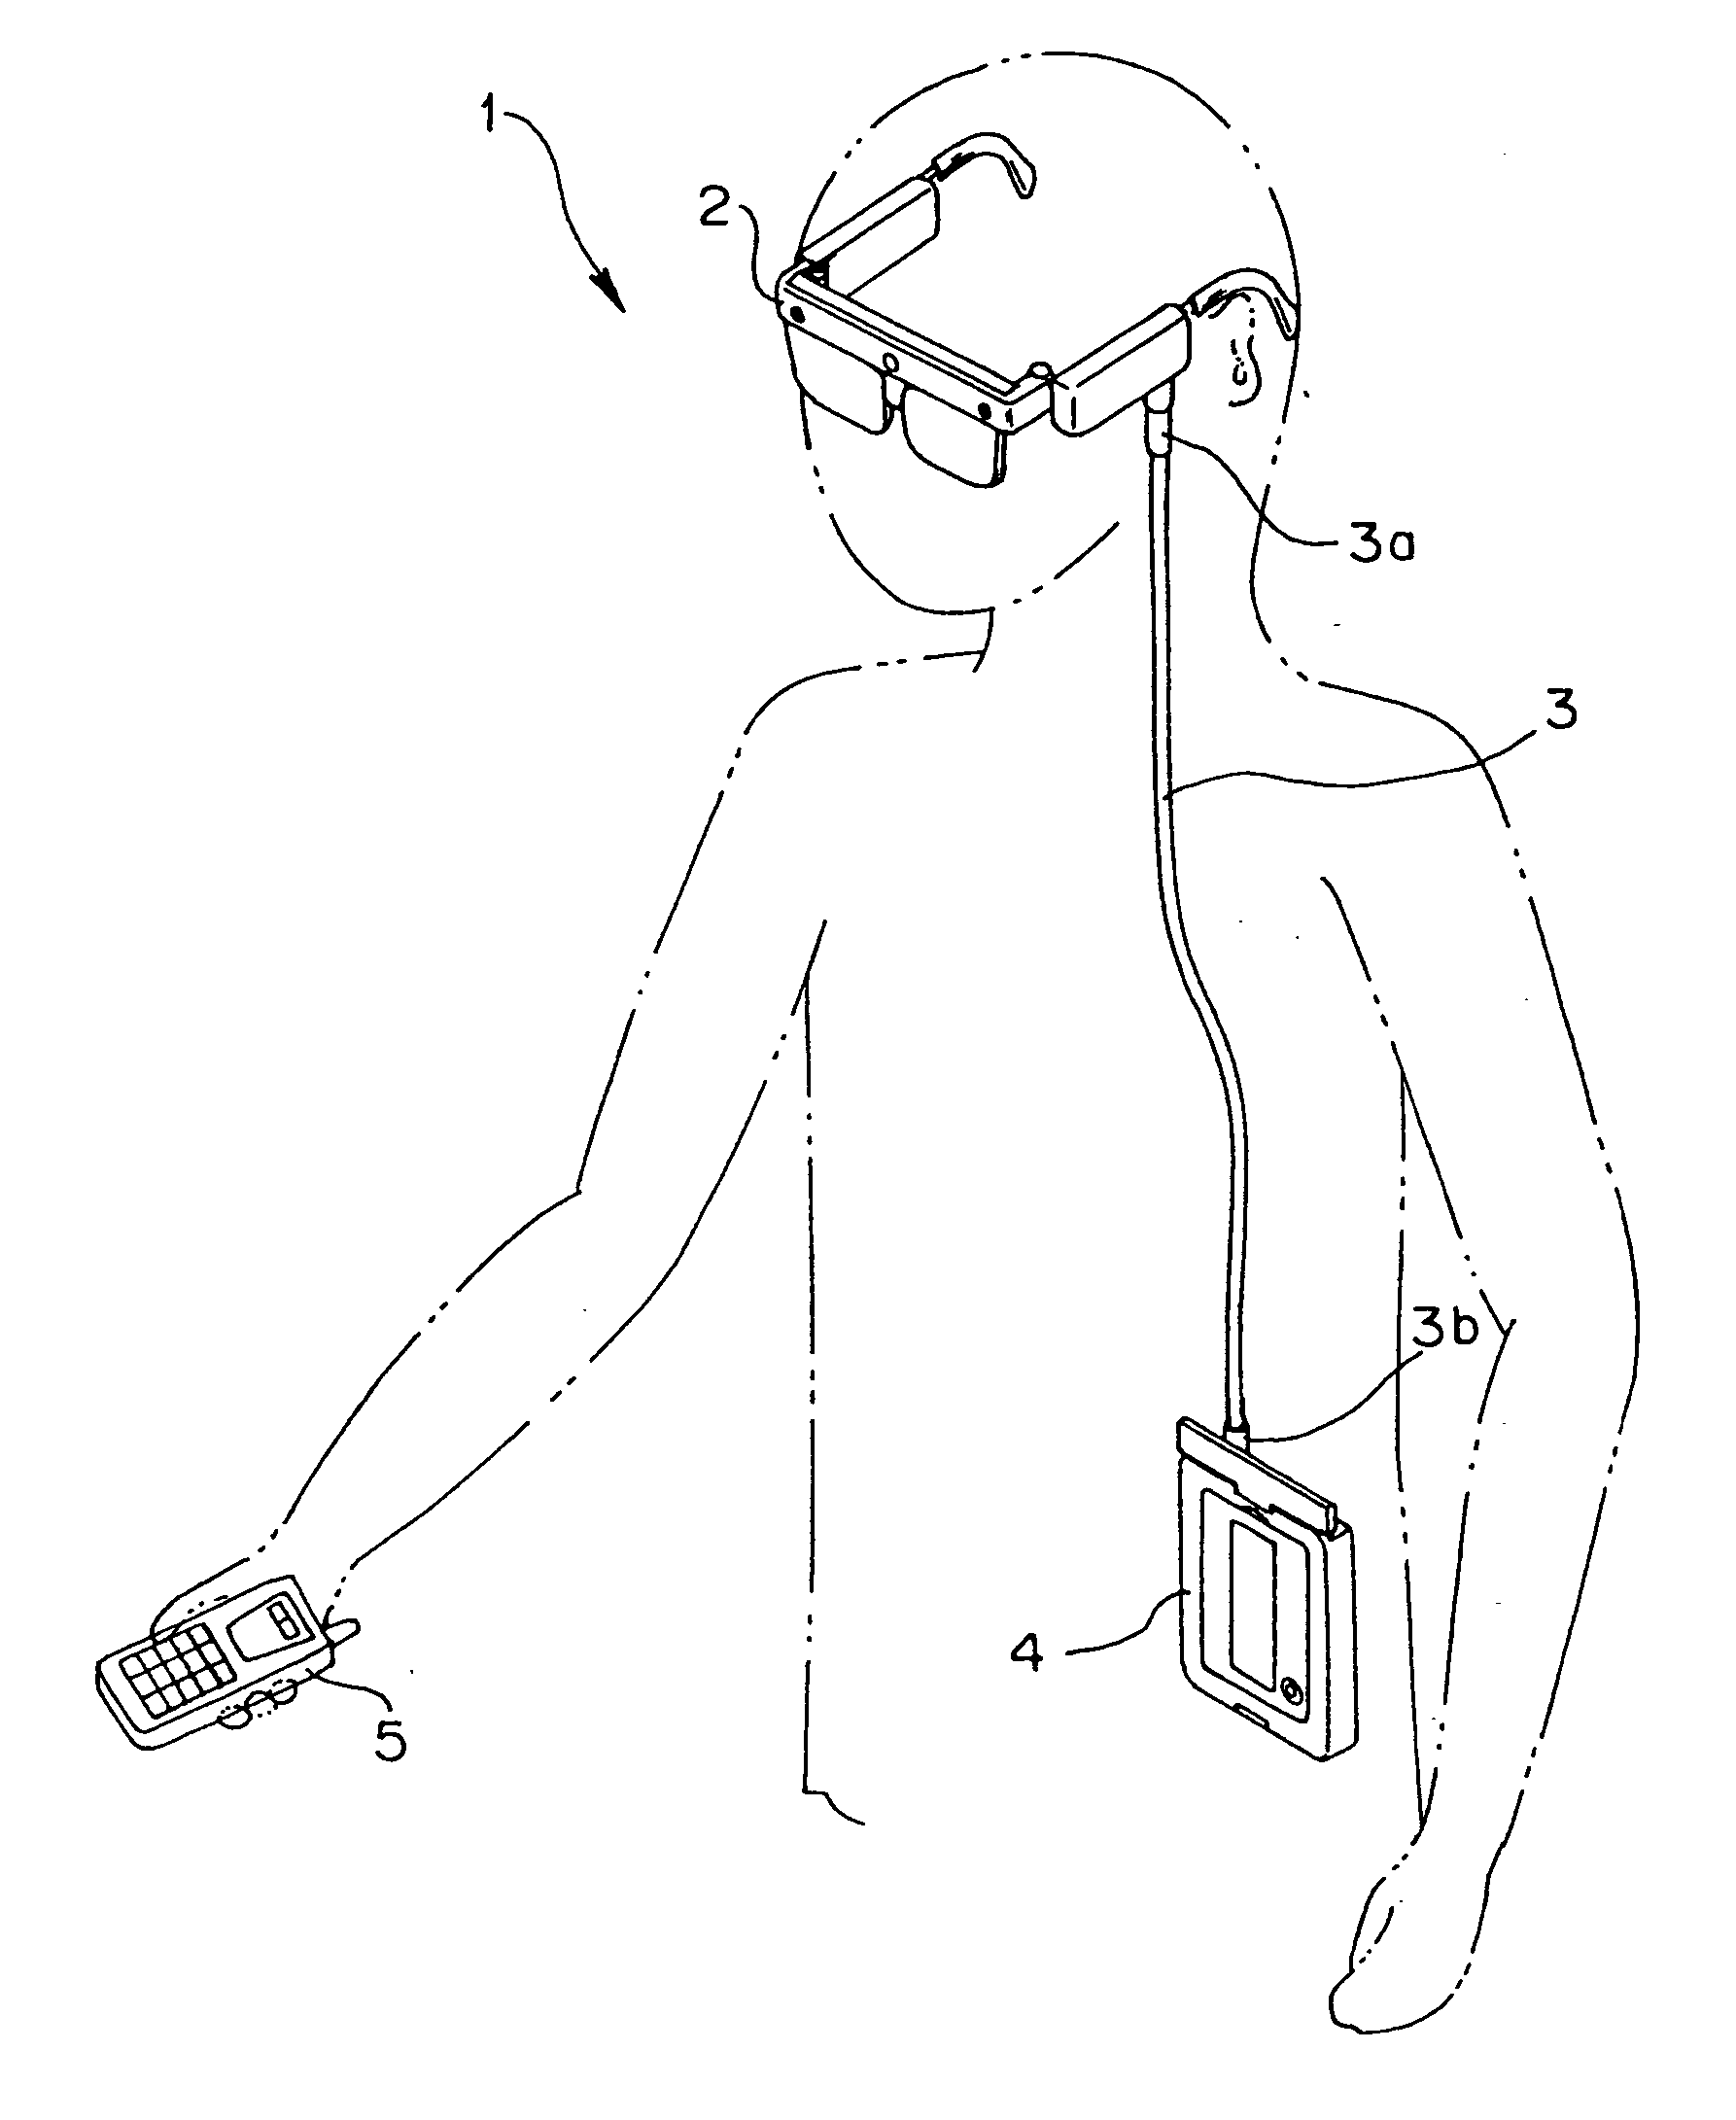 Head-mounted display apparatus